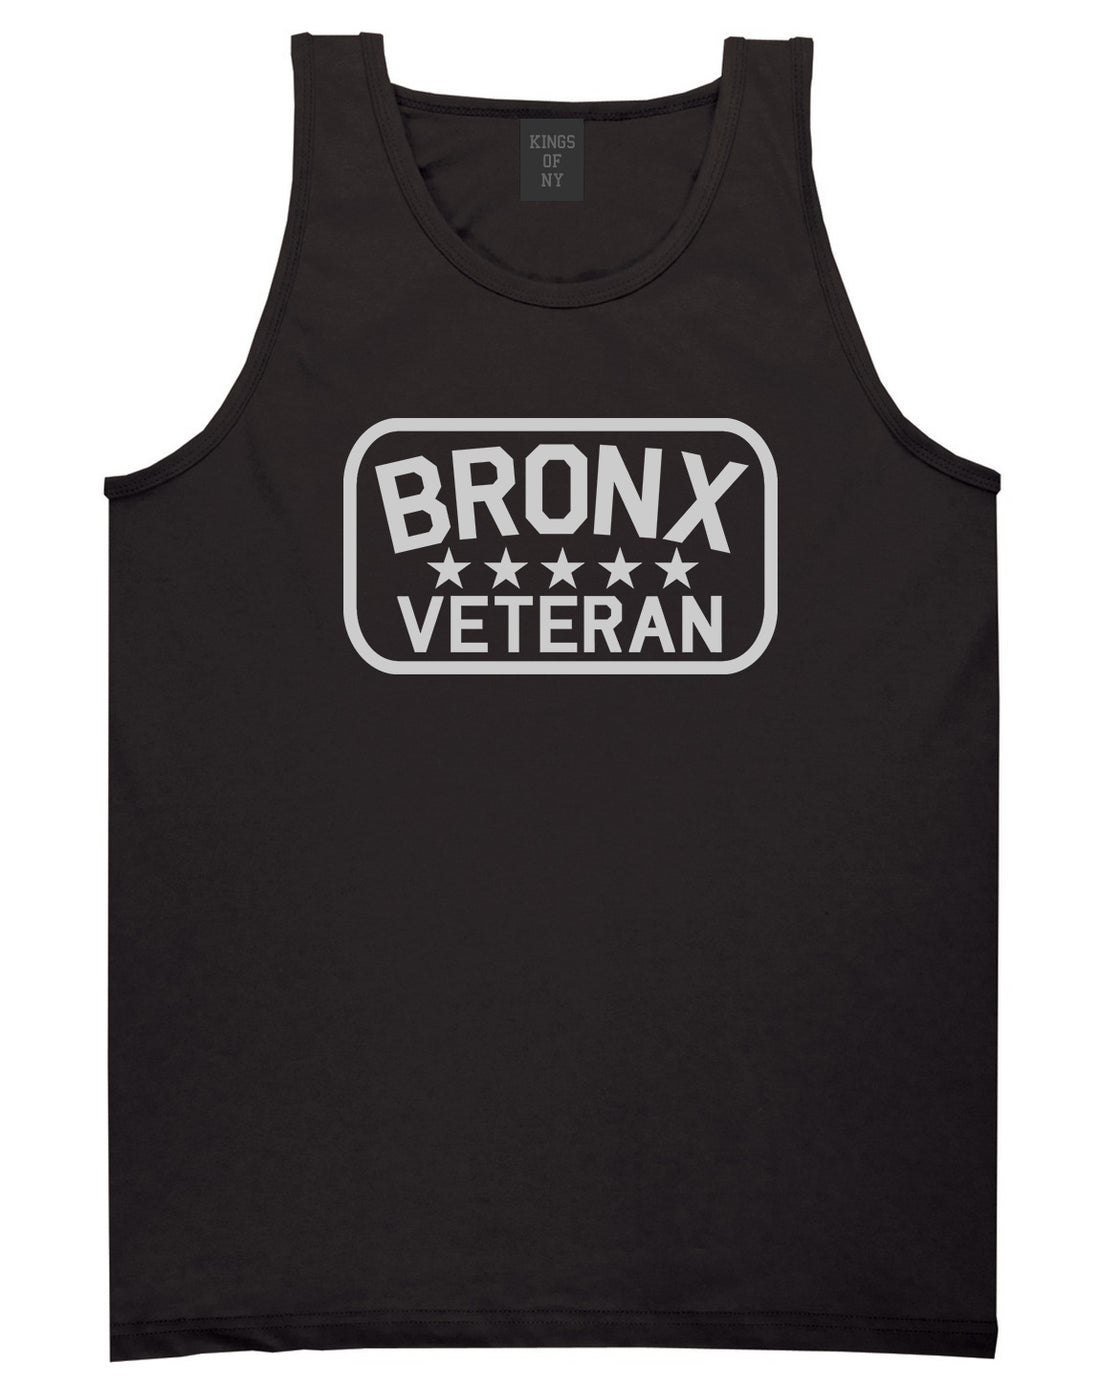 Bronx Veteran Mens Tank Top Shirt Black